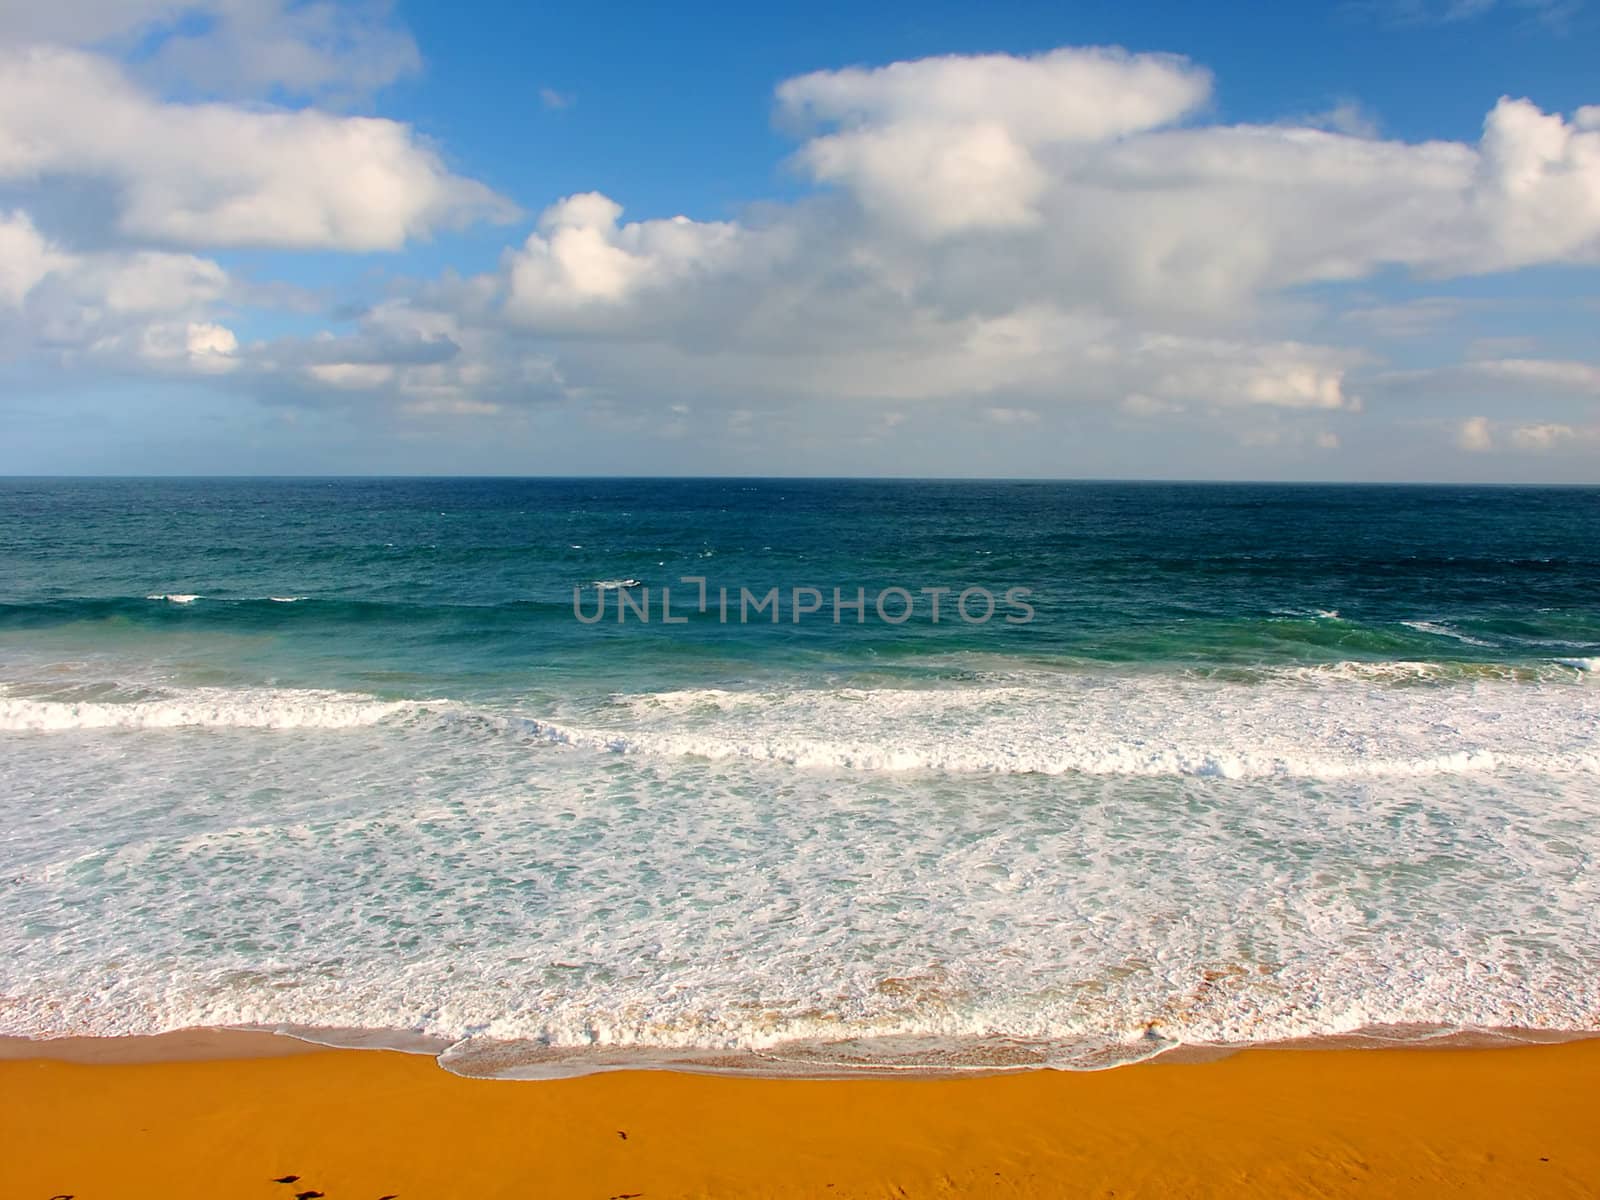 Logans Beach in Australia by Wirepec